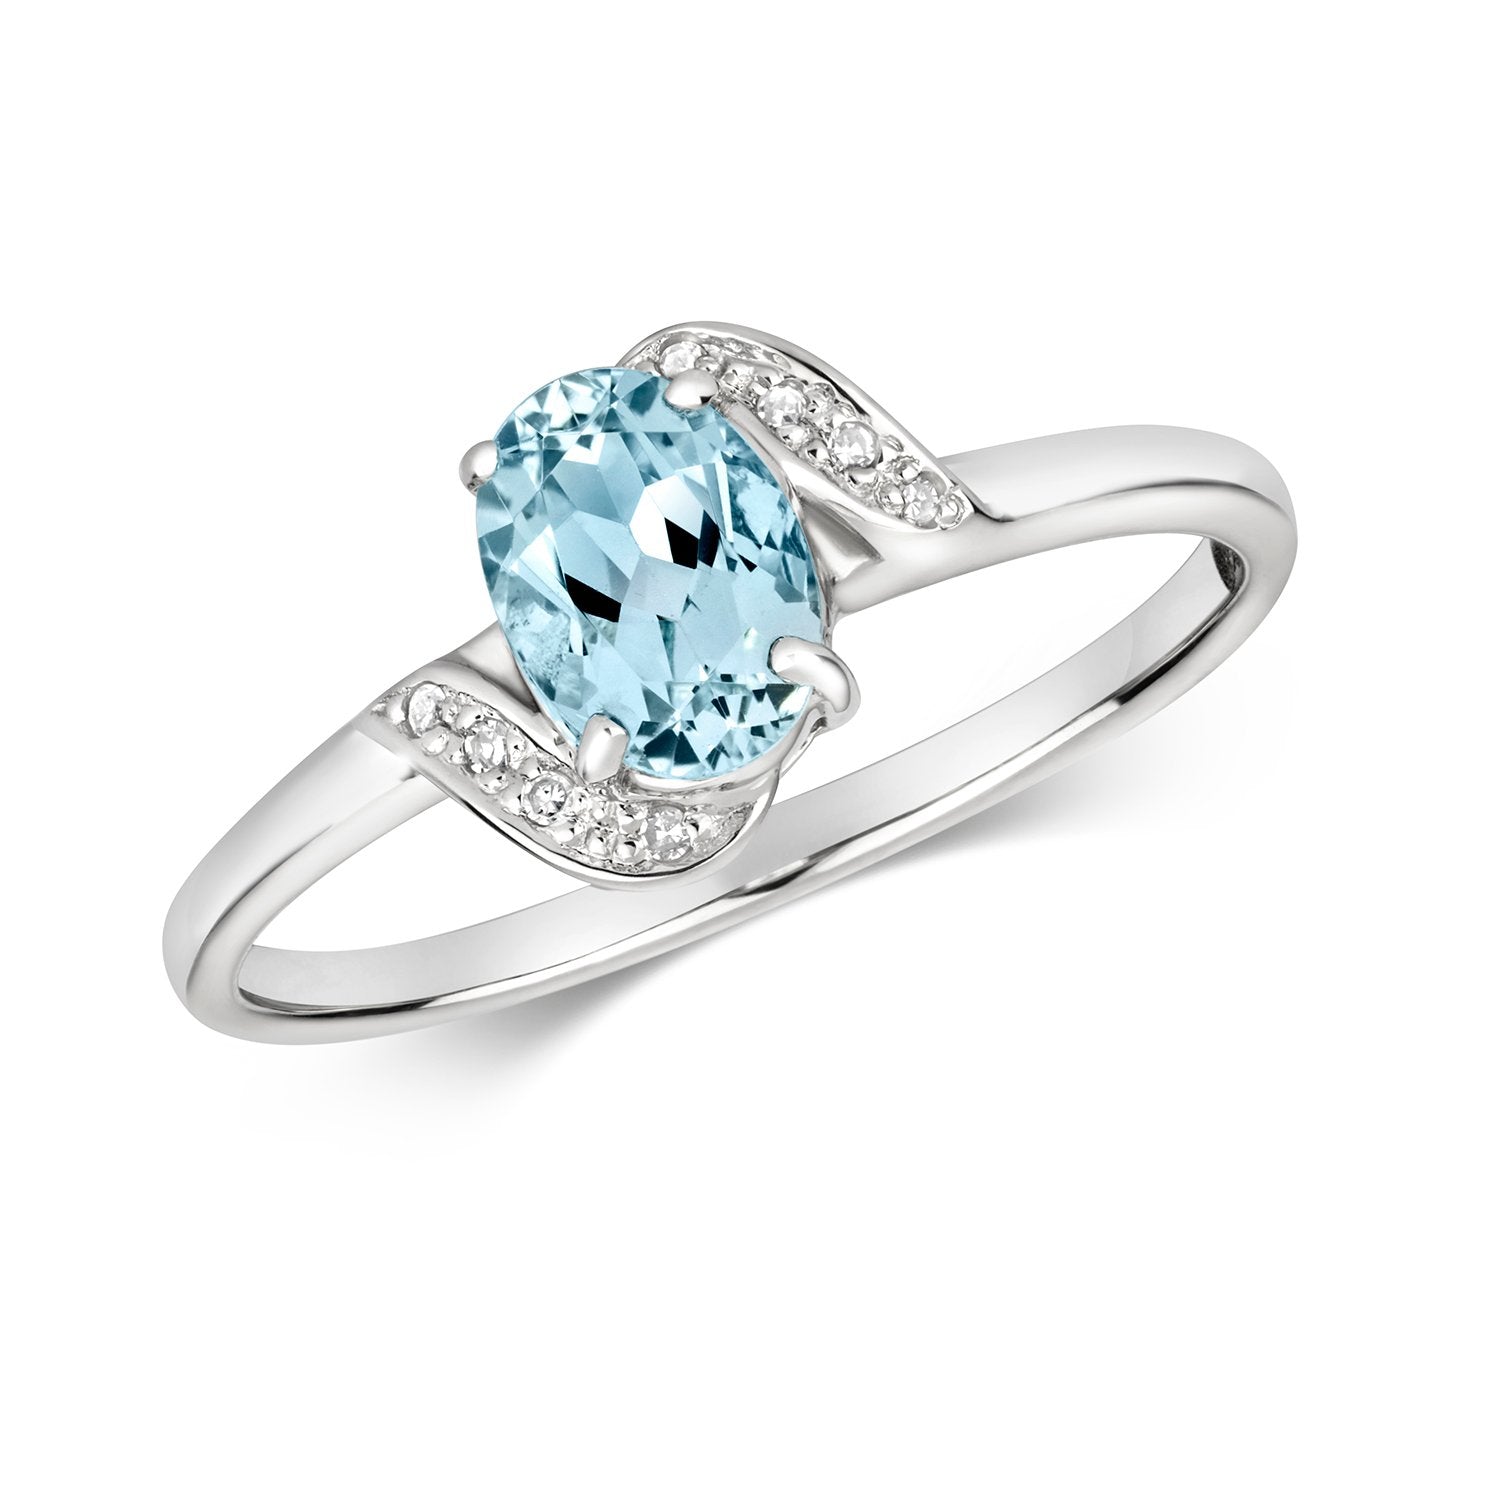 Aquamarine & Diamond Solitaire Ring (Rd476waq)